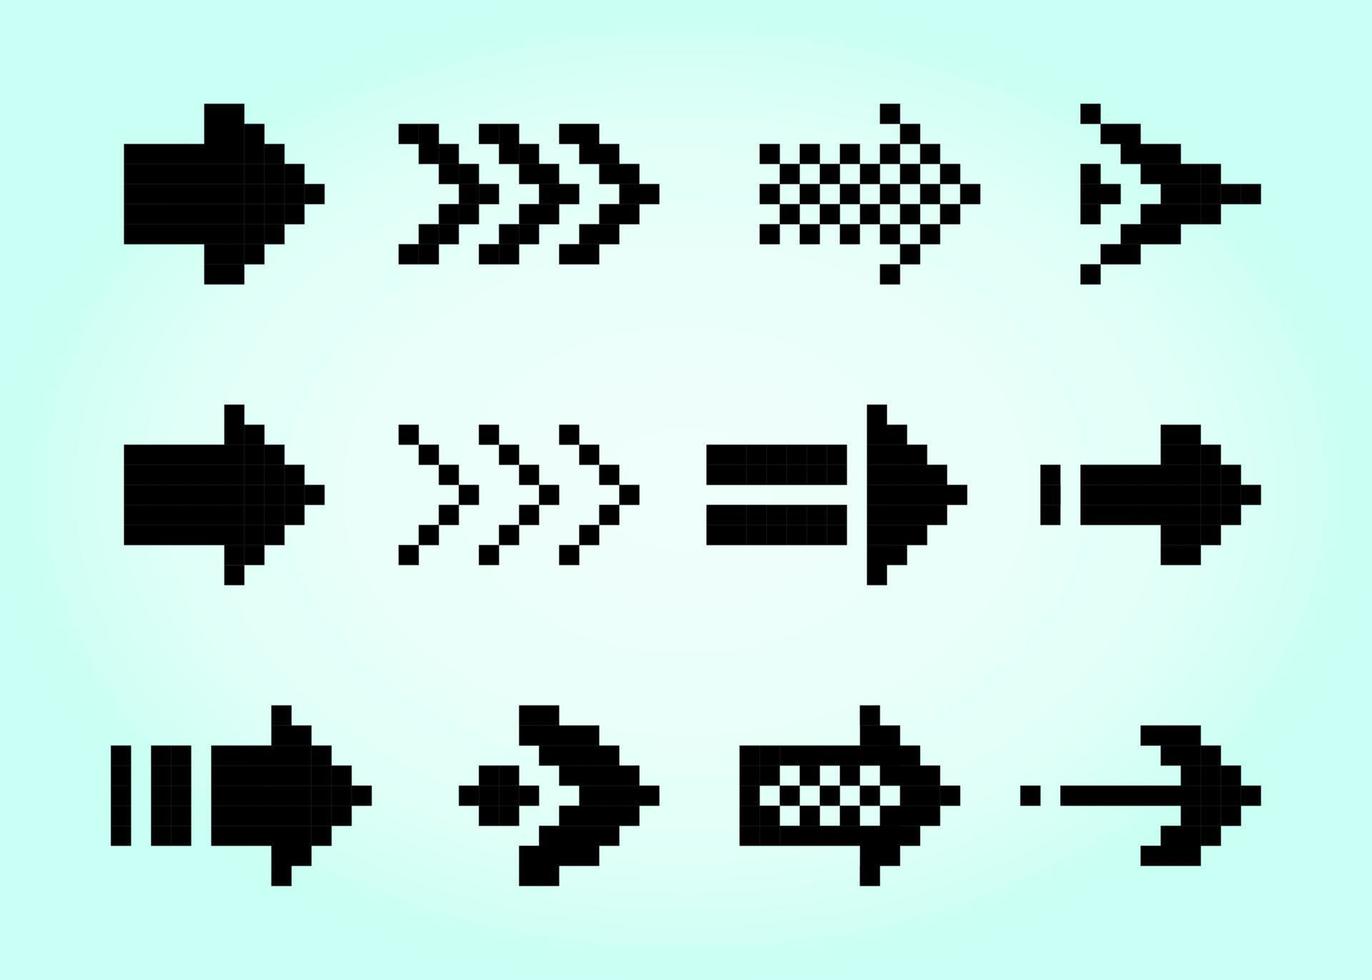 Arrow collection pixels. Vector illustration of 8 bit game assets.